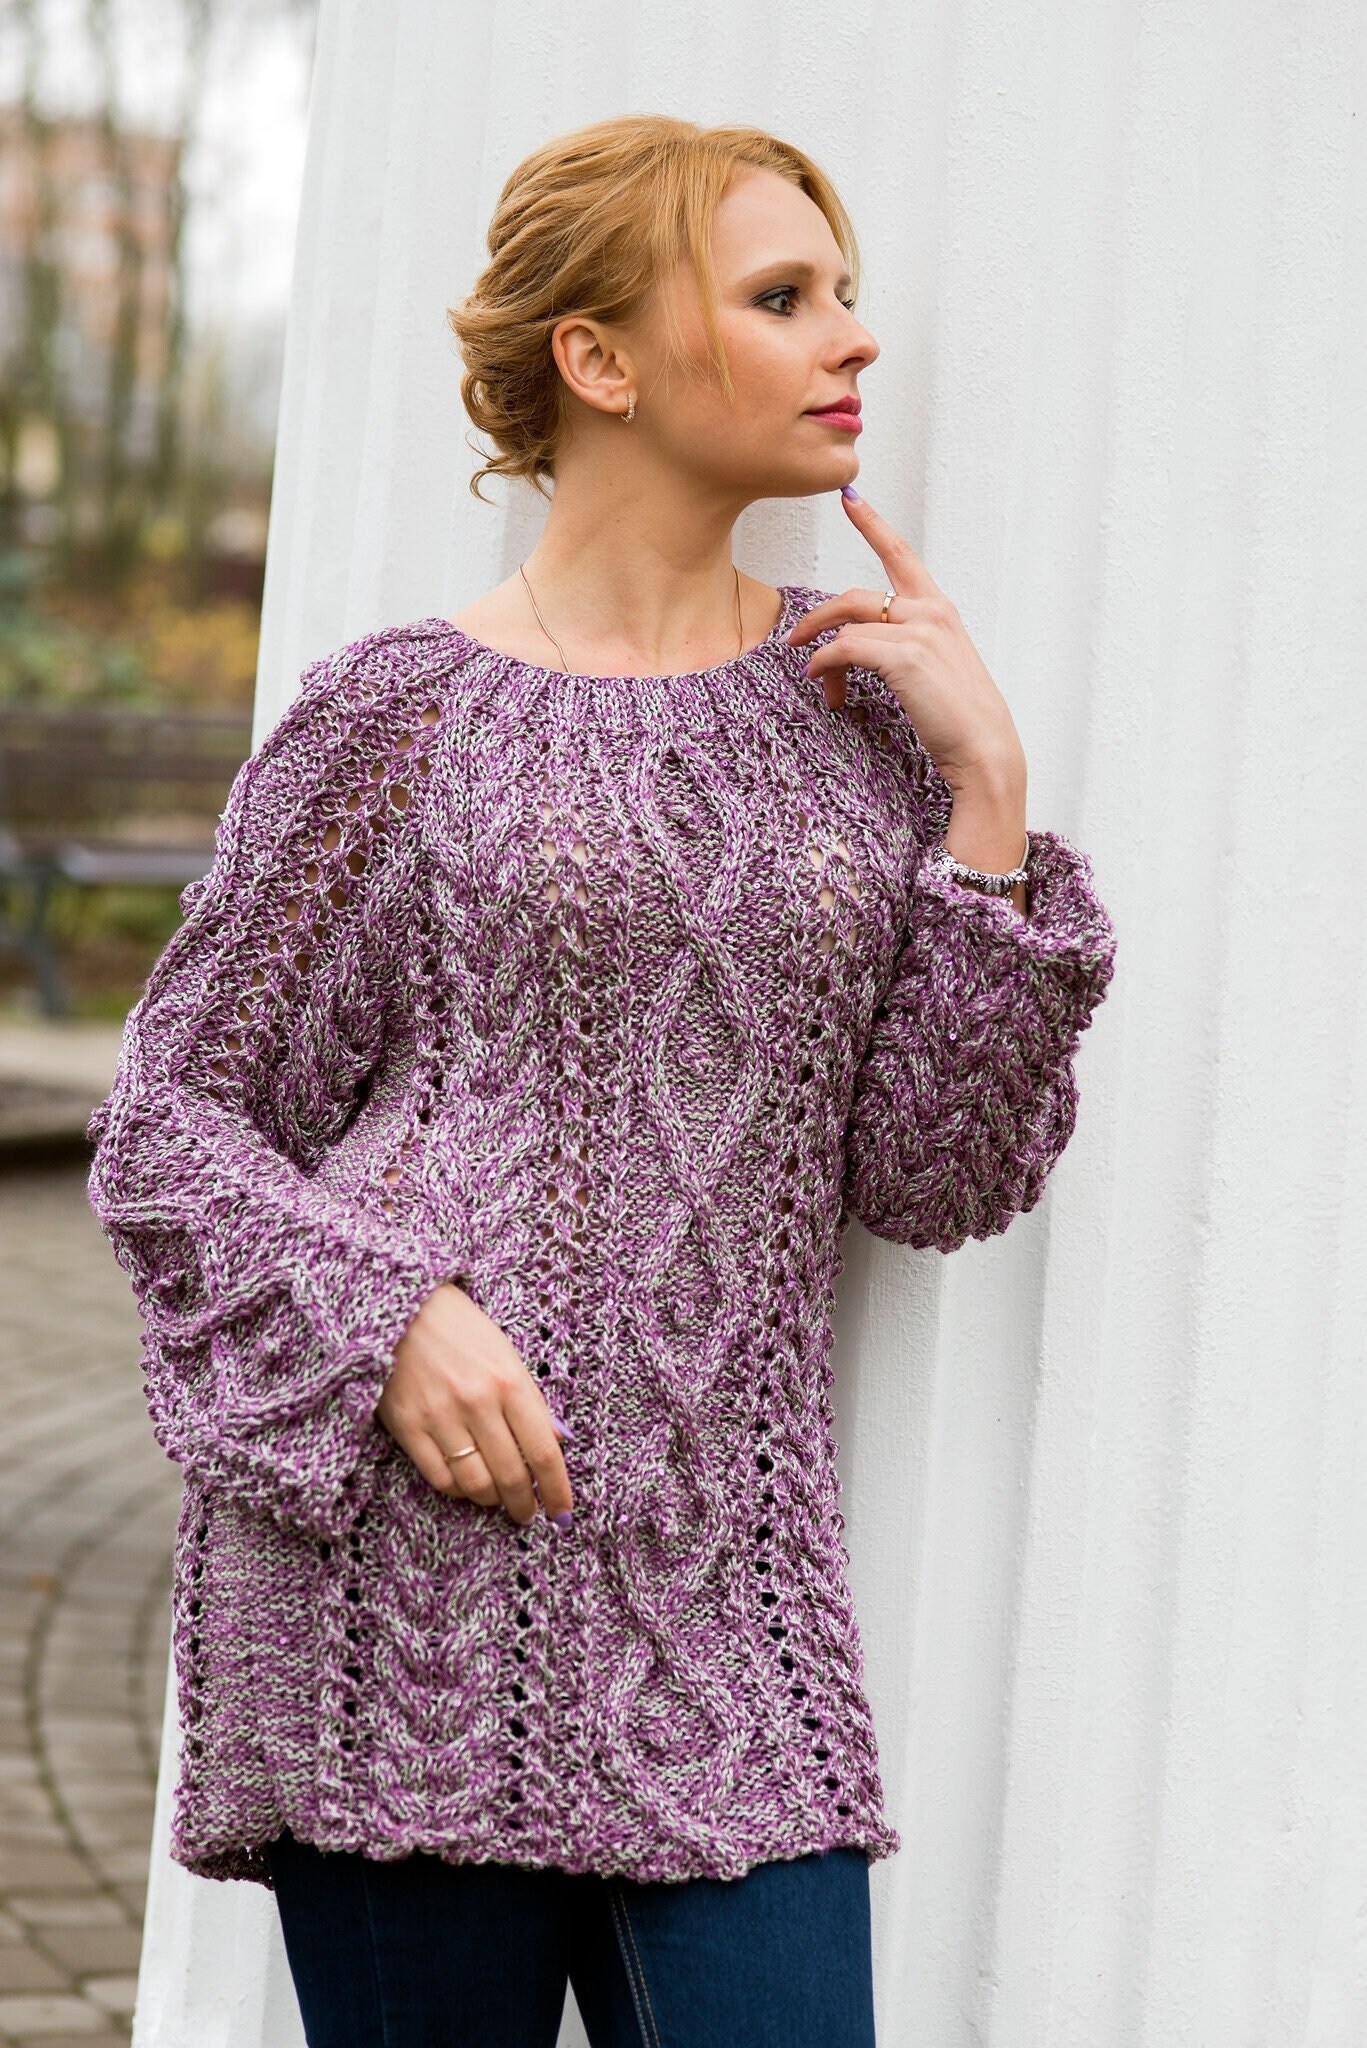 Kleding Dameskleding Sweaters Pullovers Dames vlecht trui "Autumn" handgebreid 